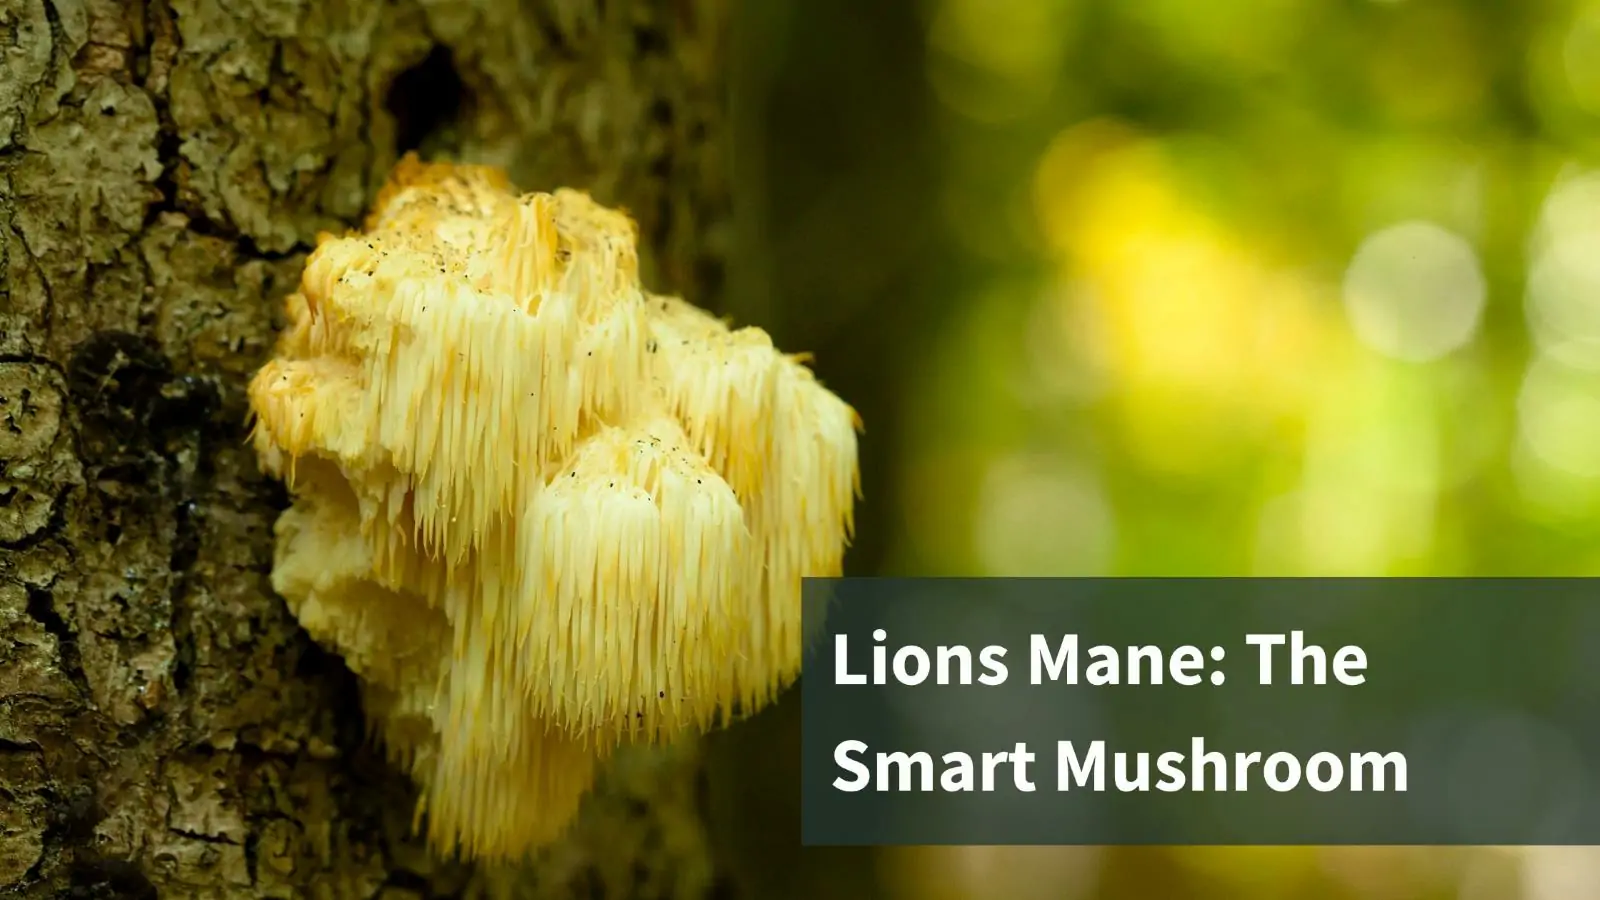 A Lion's Mane Mushroom growing on a tree. Text reads "Lions Mane: The Smart Mushroom"